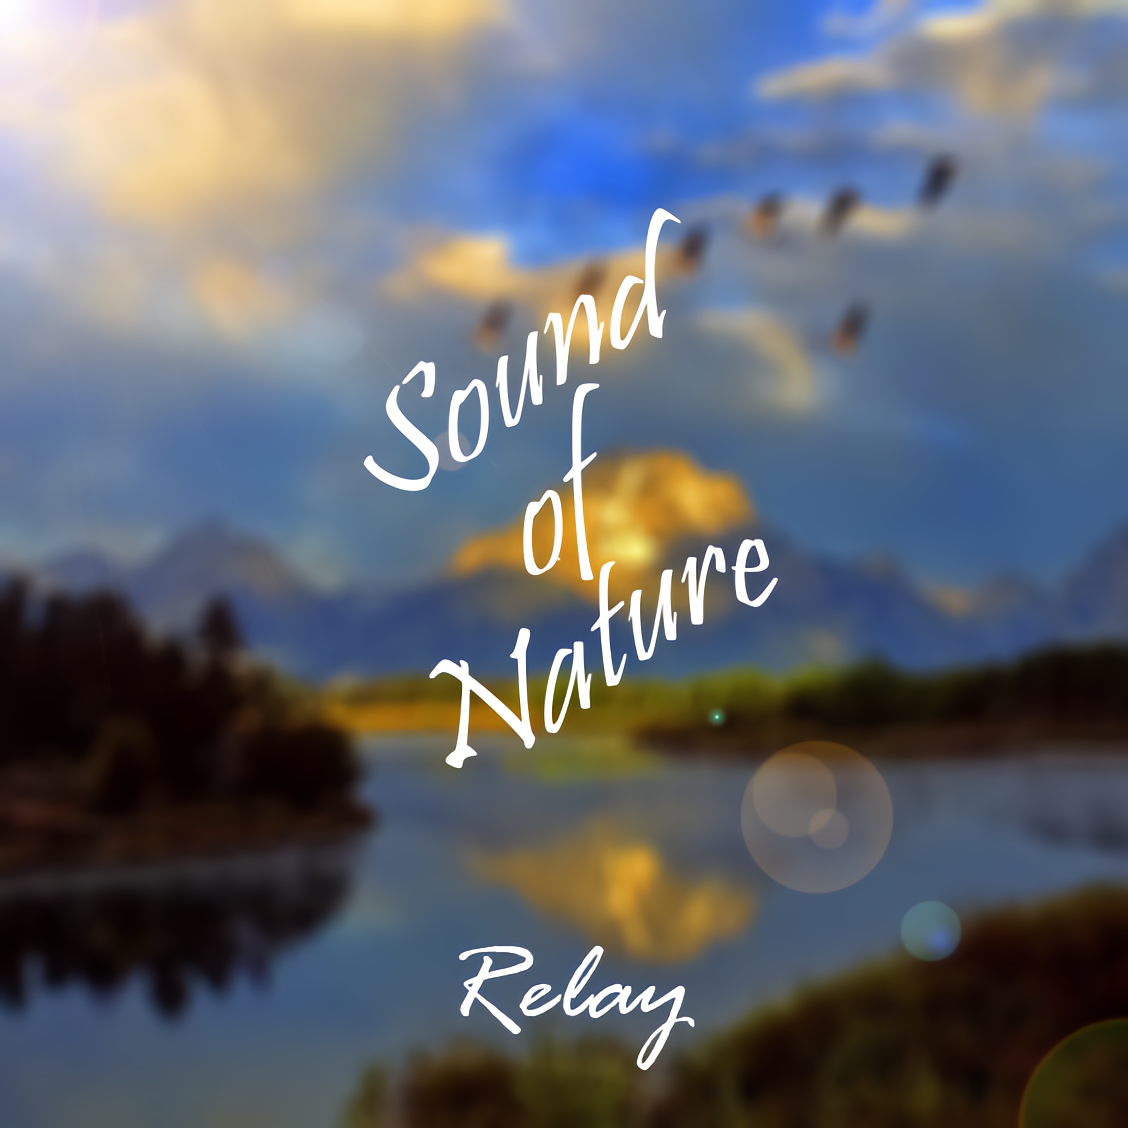 Sound of Nature